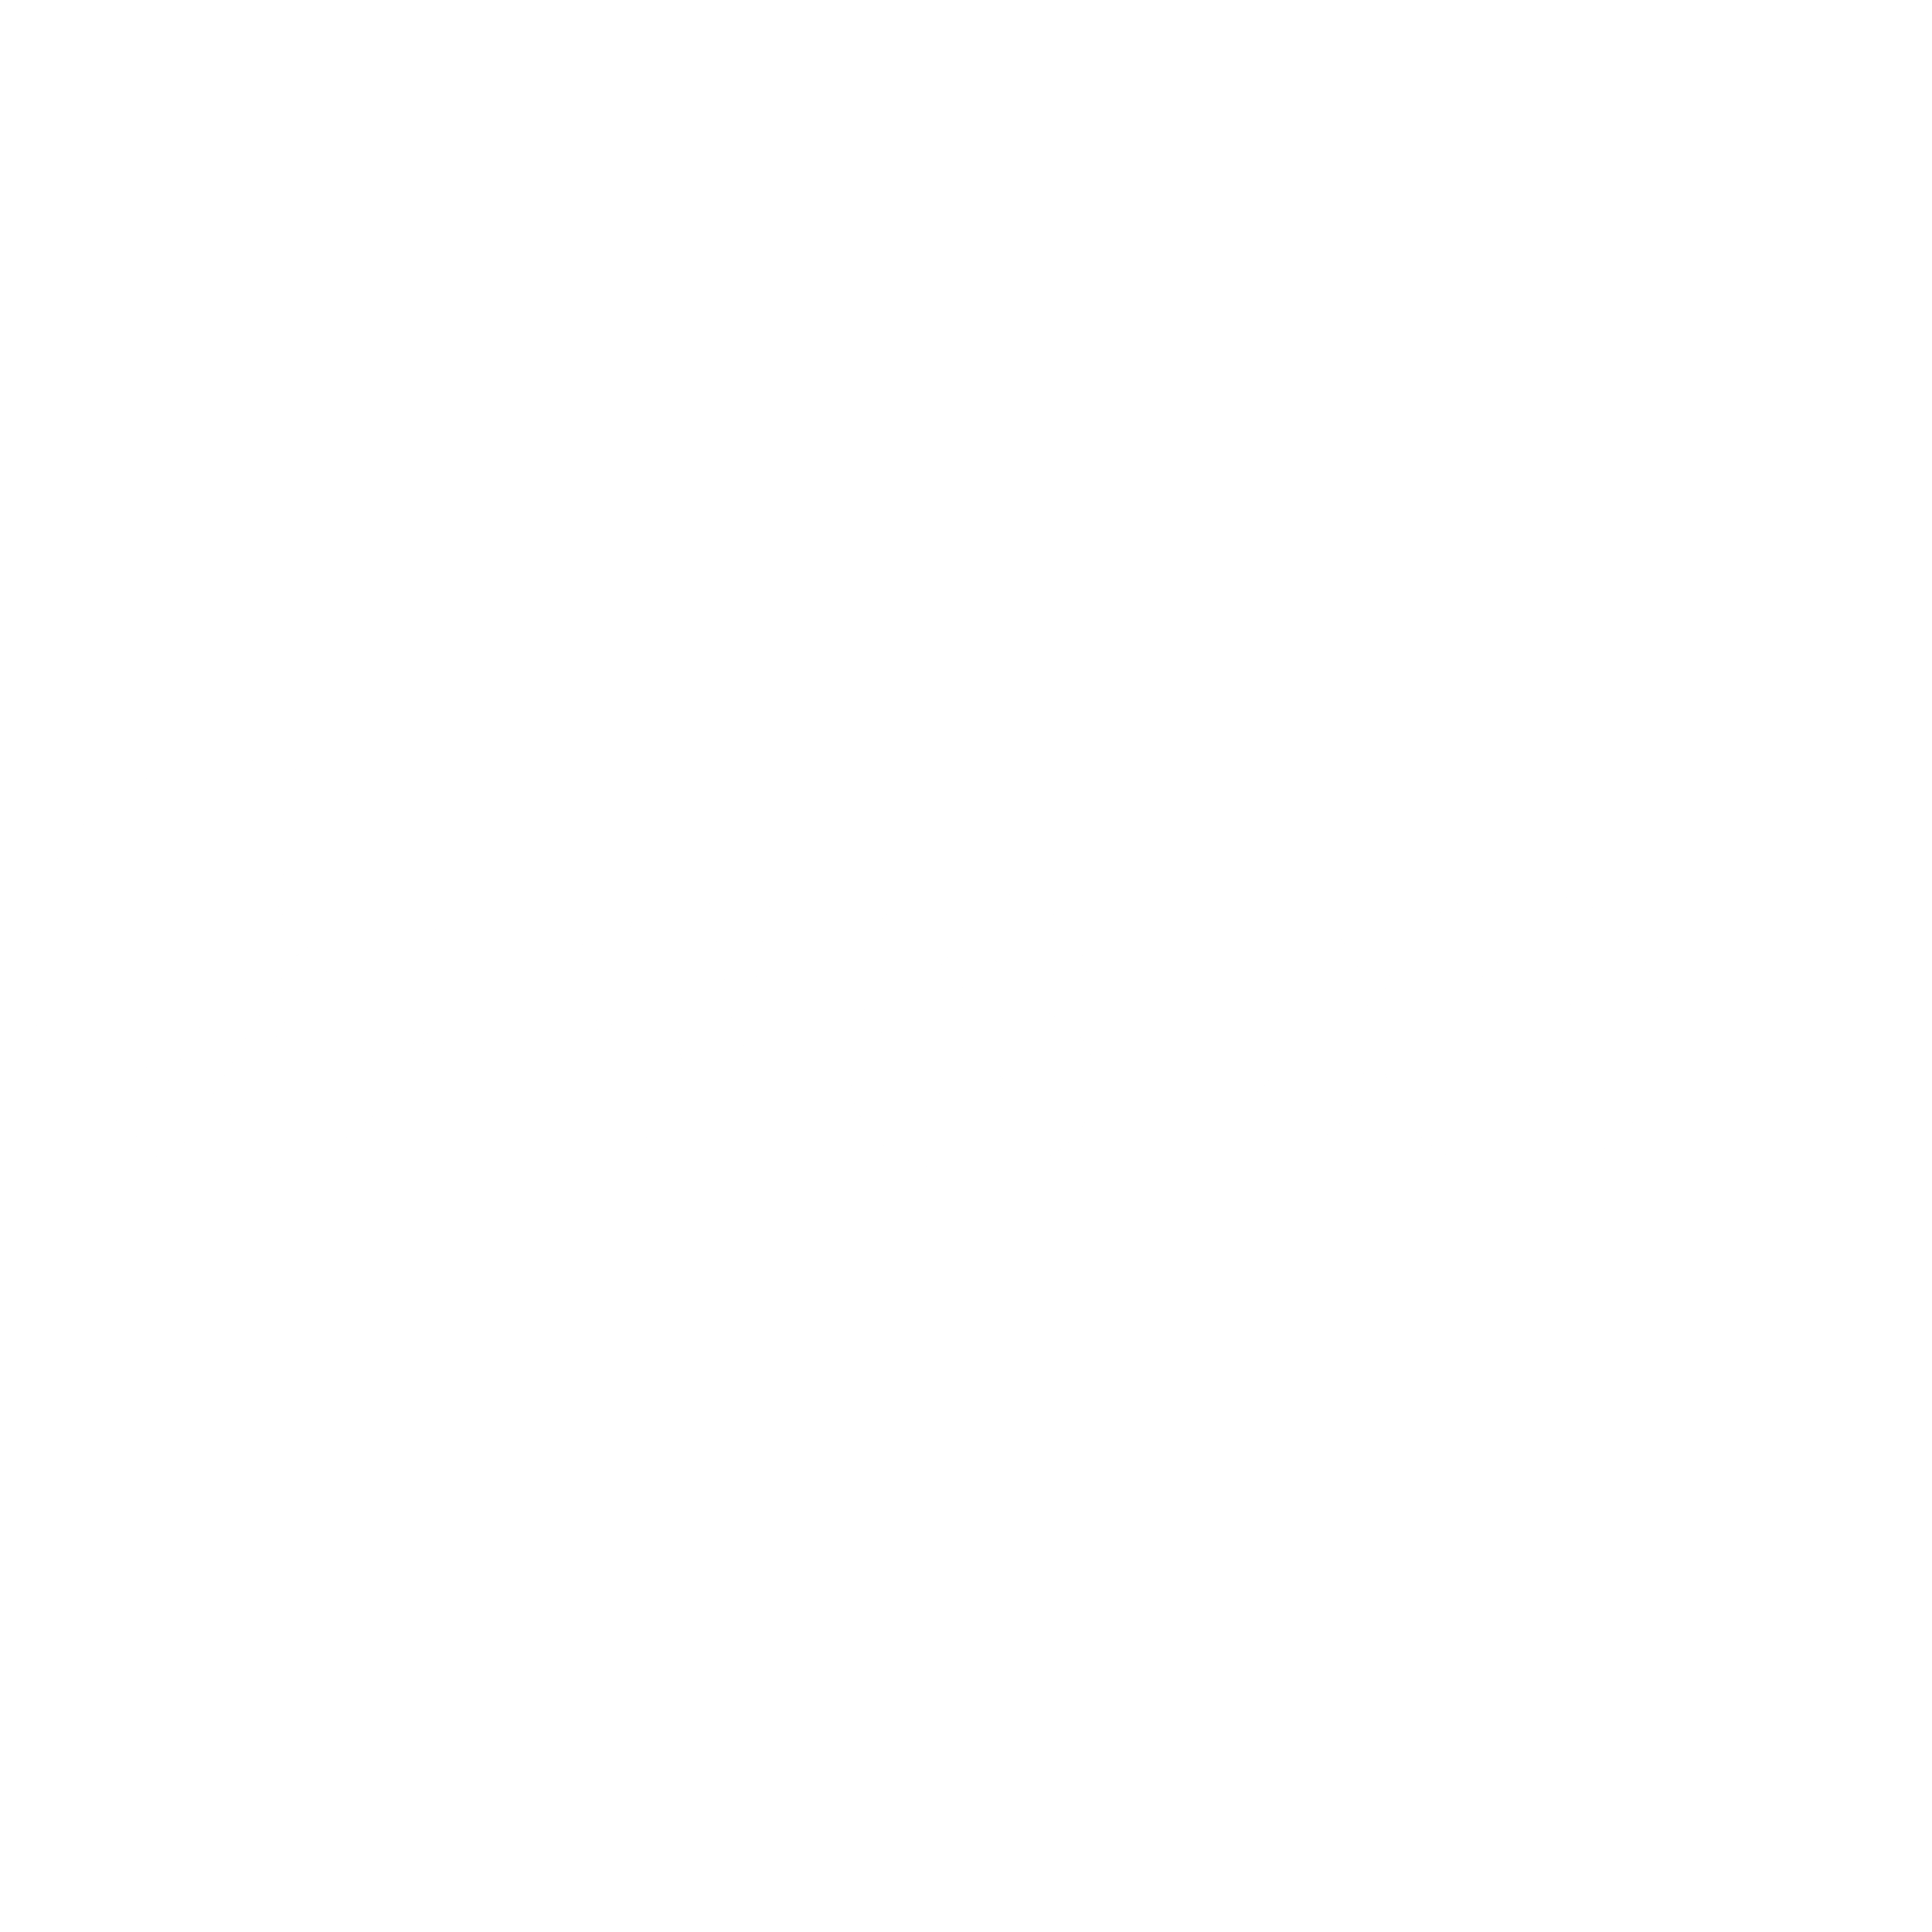 WSDOT Logo - WSDOT Logo PNG Transparent & SVG Vector - Freebie Supply